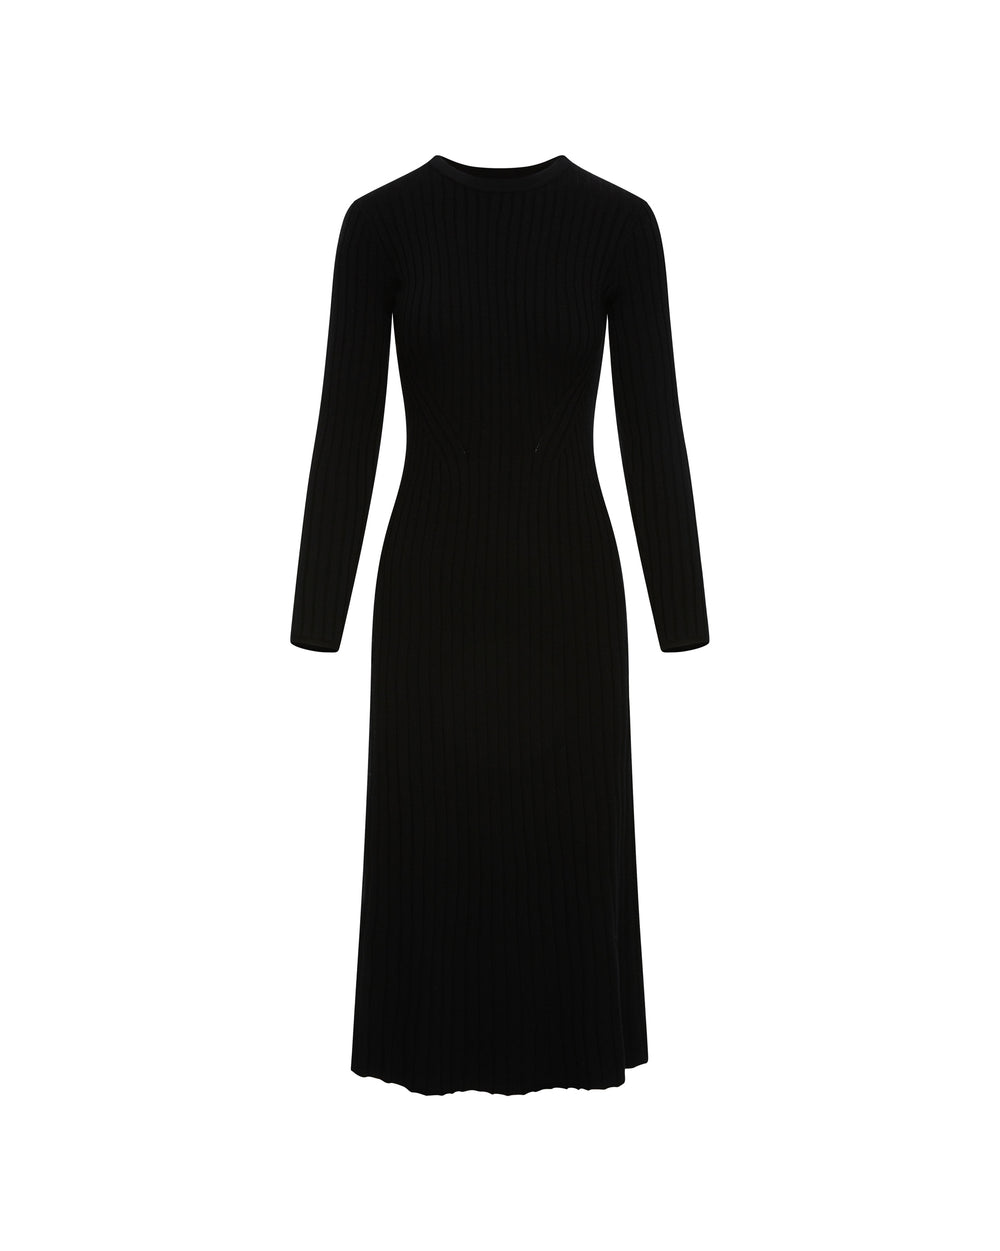 Ribbed Everyday Dress in Merino Wool | Black